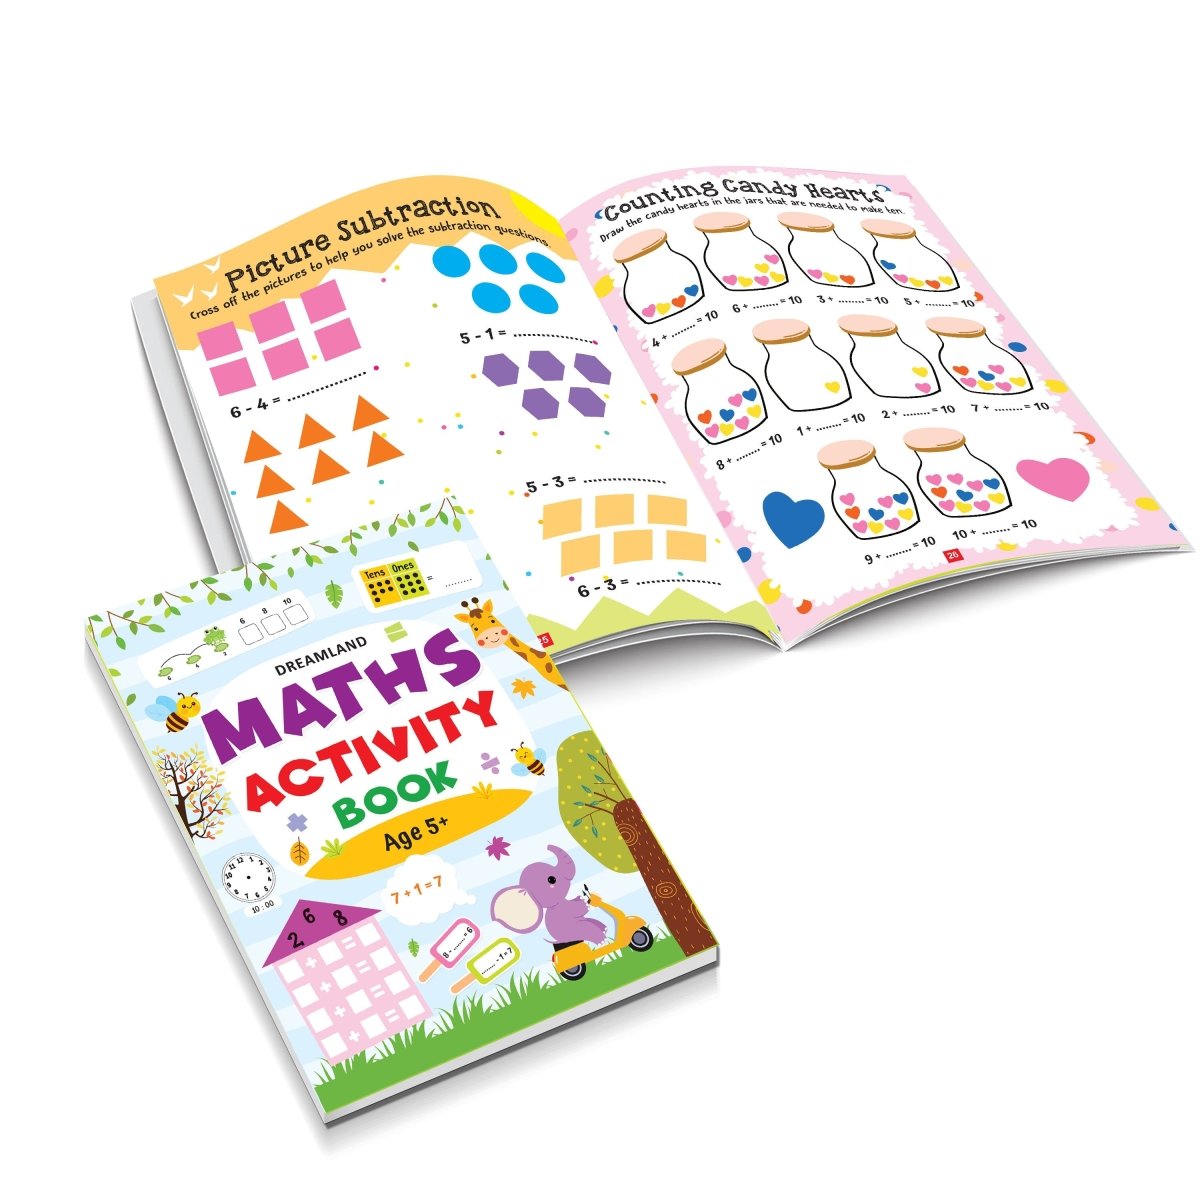 Dreamland Publications Maths Activity Book - 9789395588034